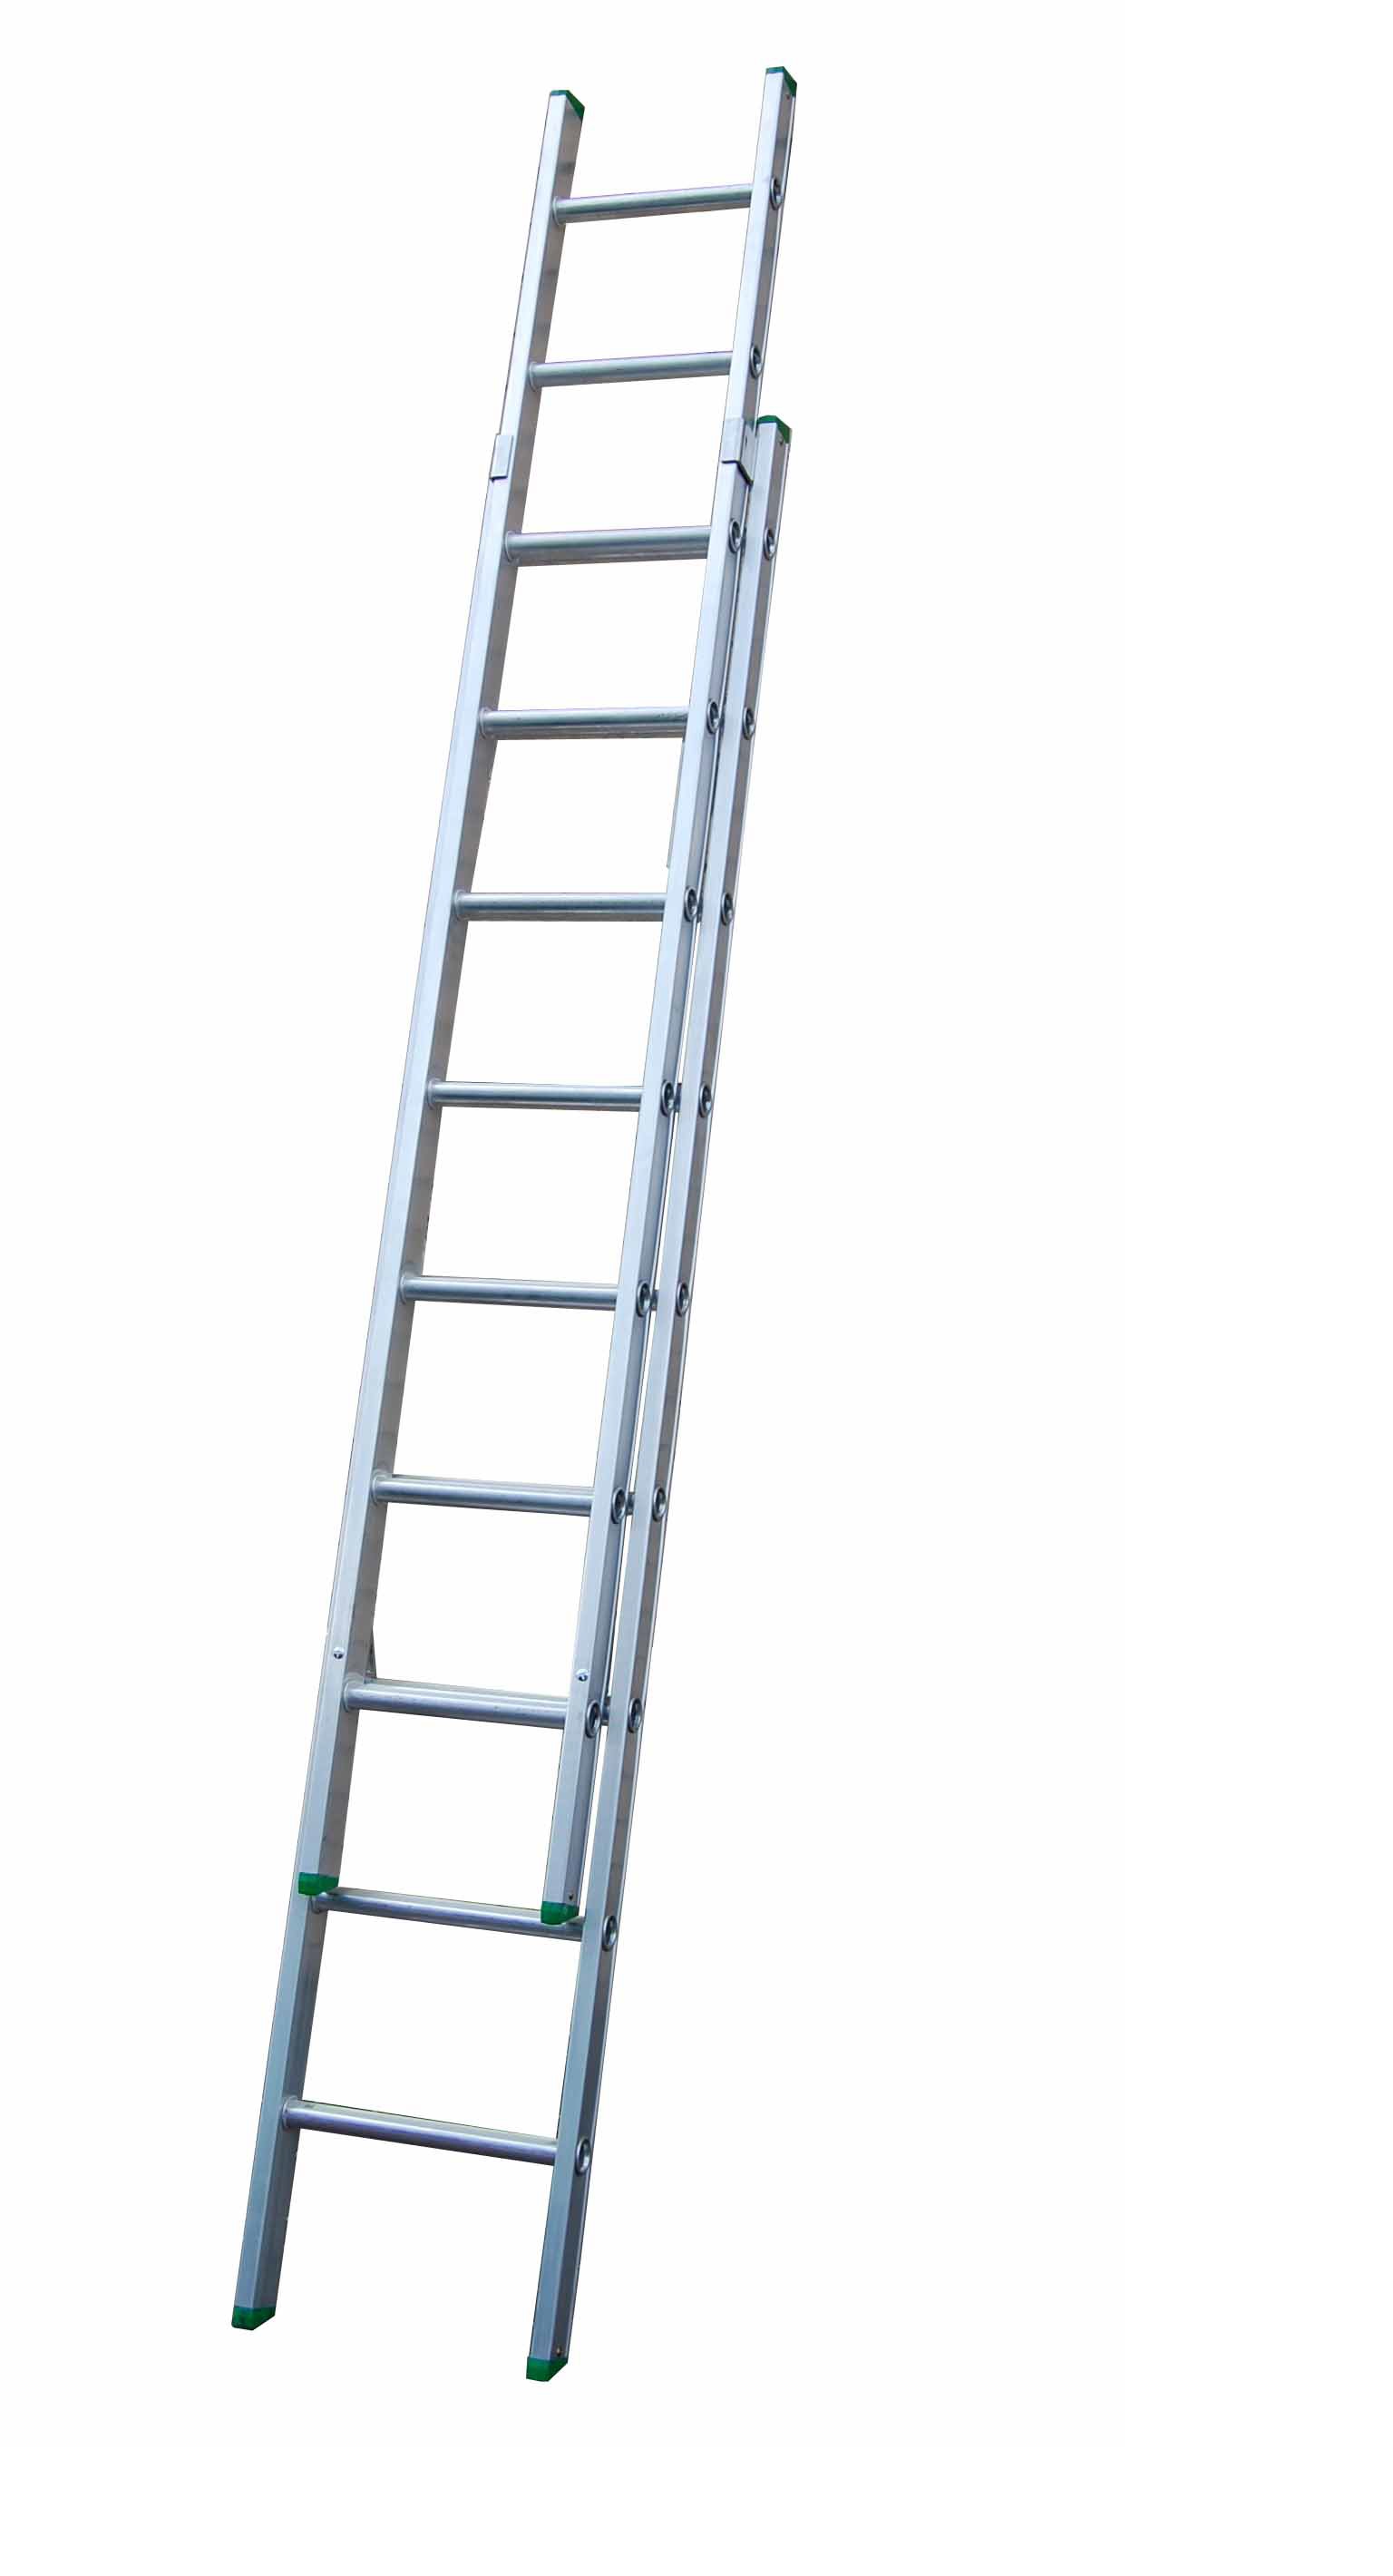 2 x 2.415 Mtr Alu Extension Ladder c/w Steady Arms